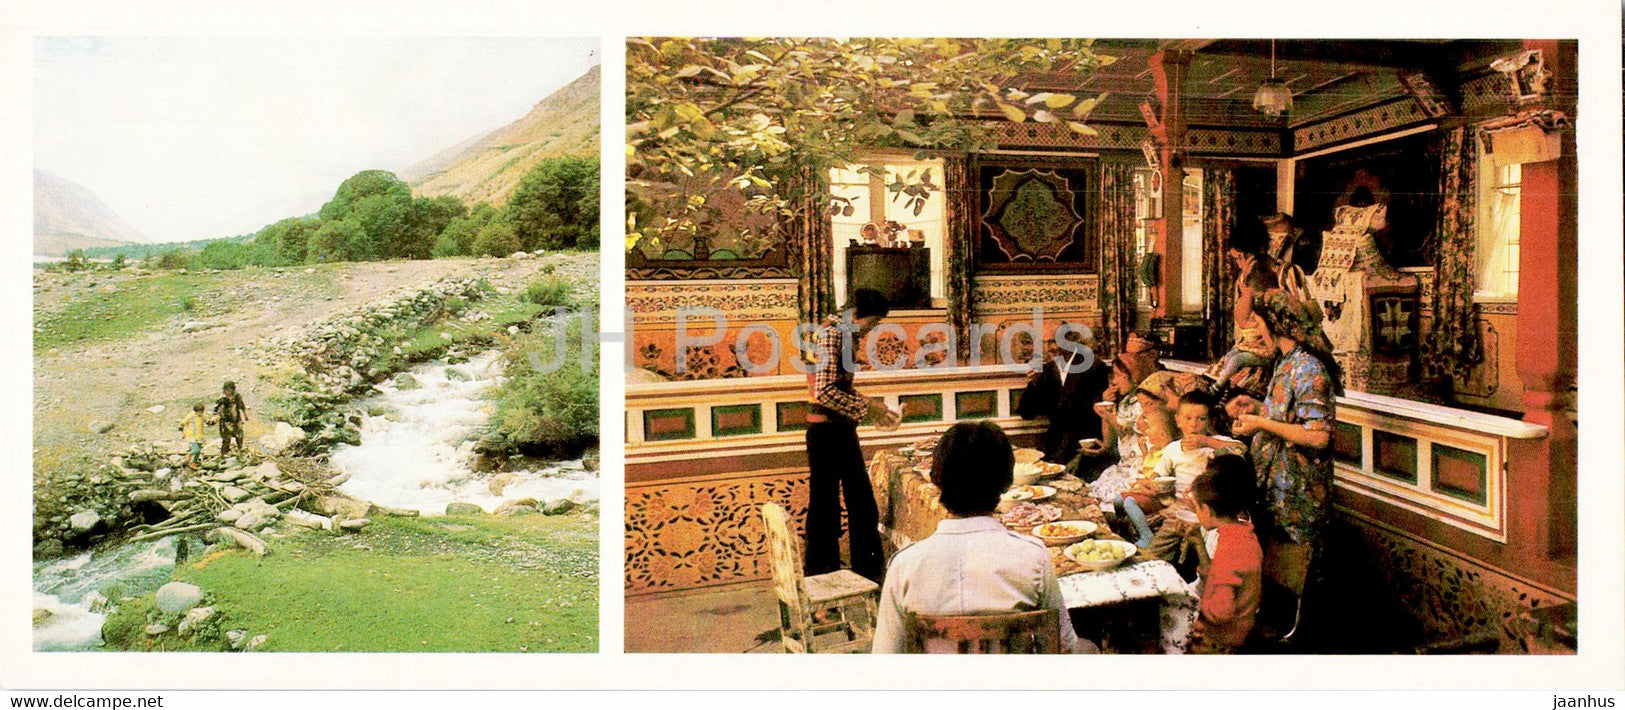 Pamir - Gorno-Badakhshan - Vanch Valley Shungan district - courtyard of the house - 1985 - Tajikistan USSR - unused - JH Postcards